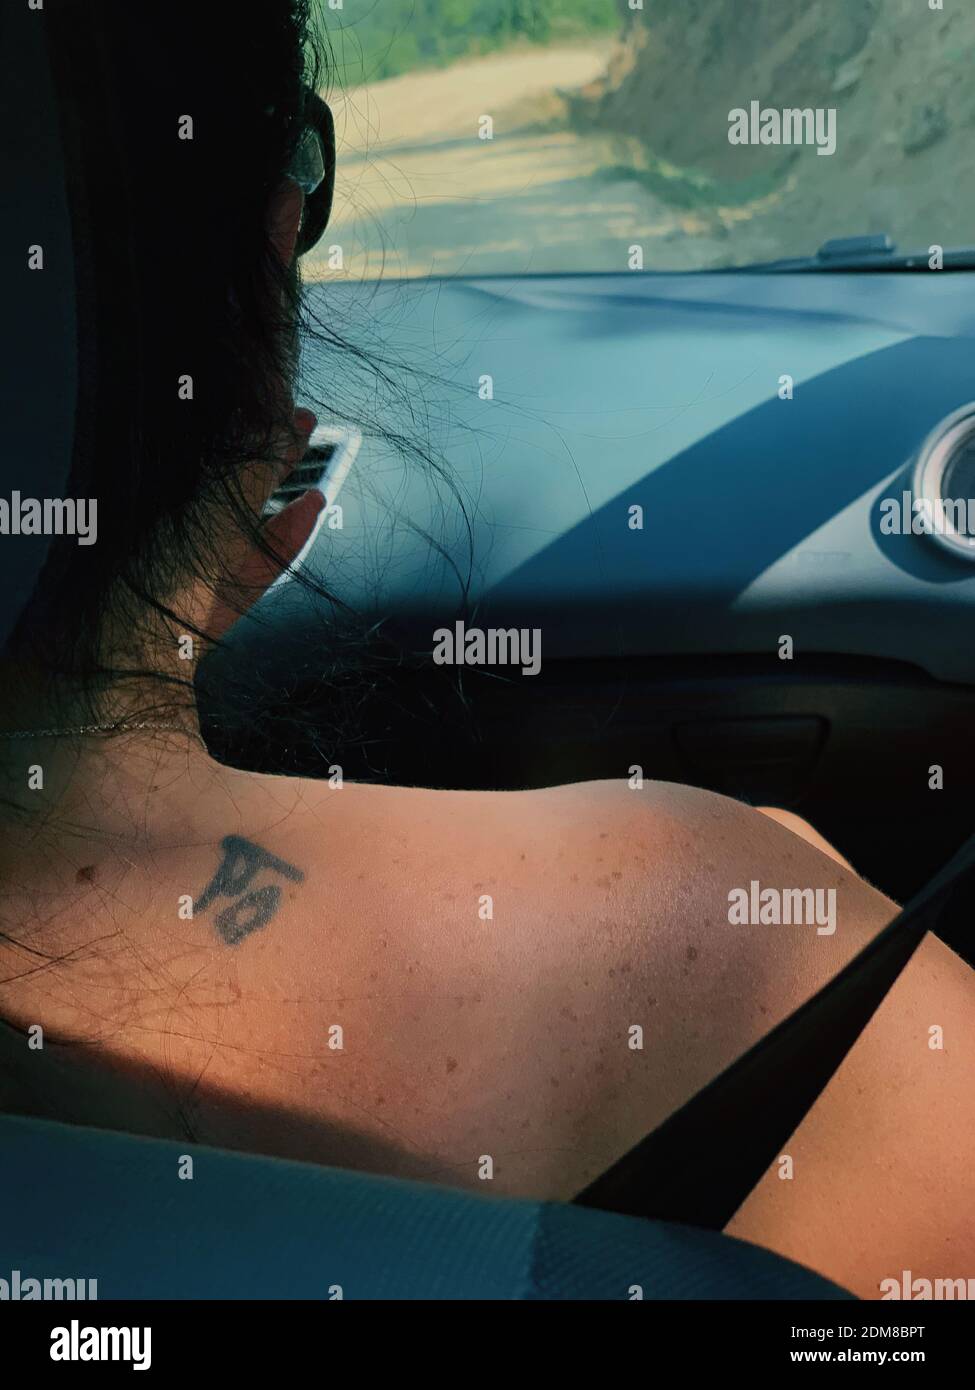 Tattooed Ebony Beauty in River Shows Her Wet Gorgeous Shape